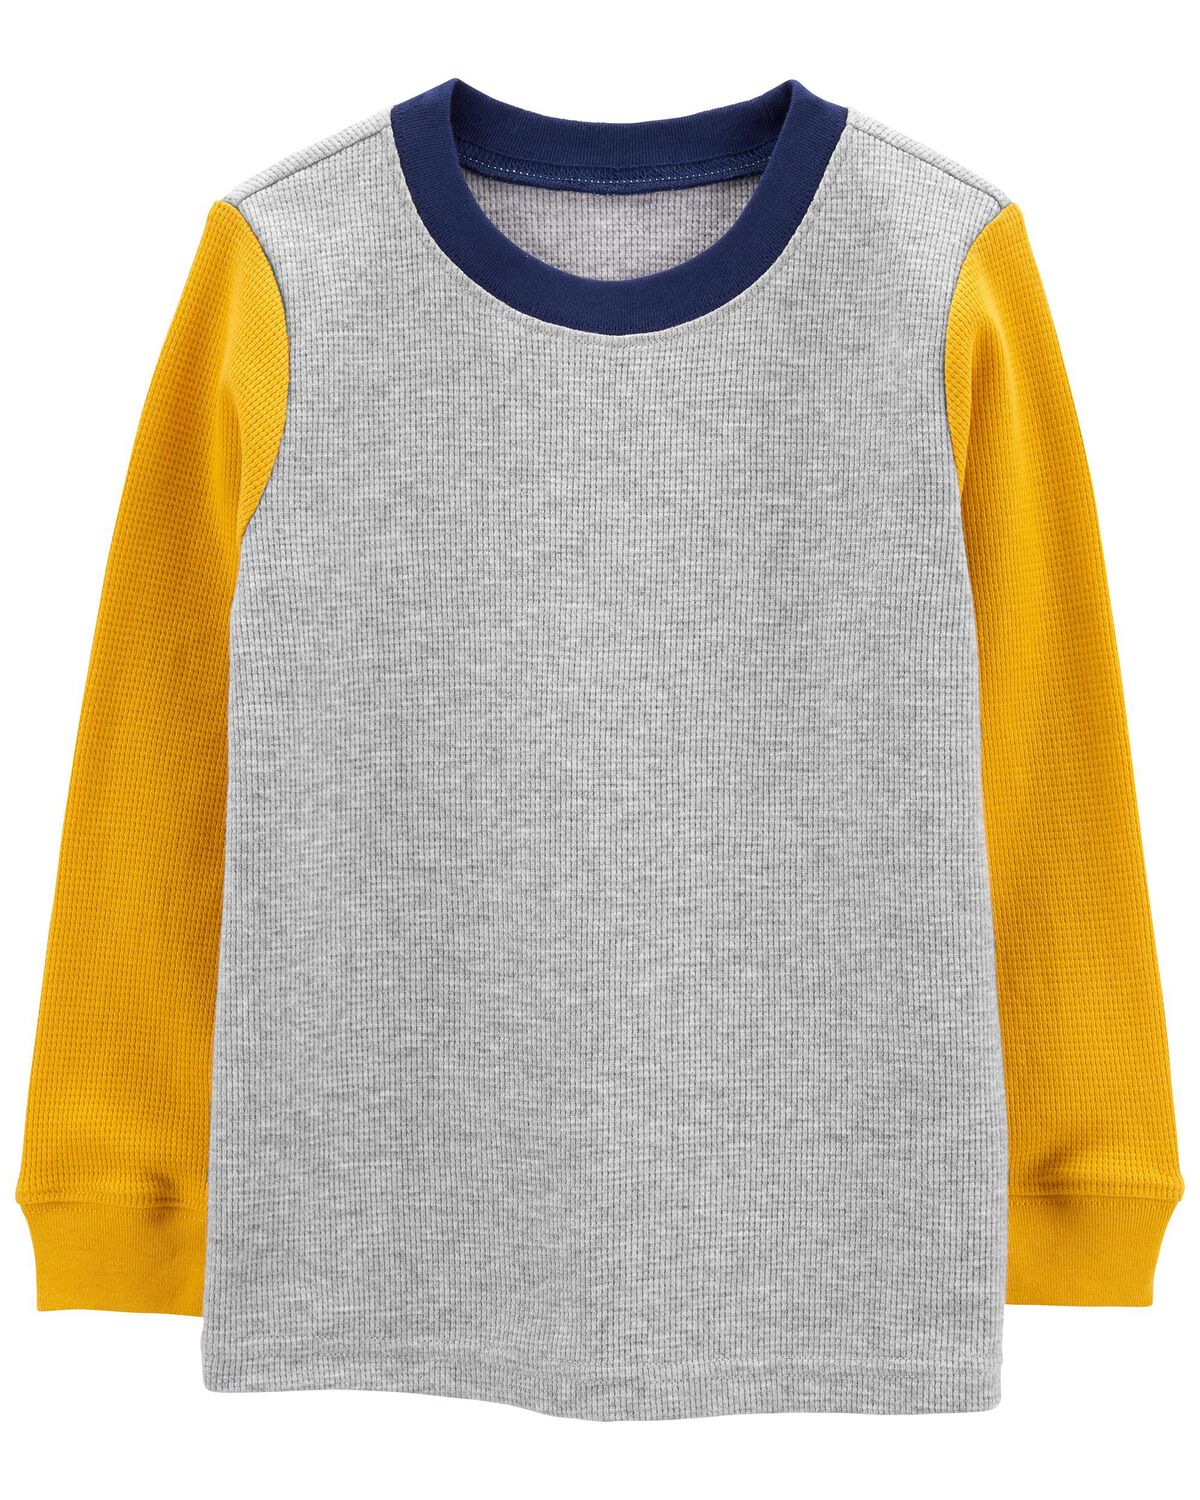 Grey/Yellow Baby Long-Sleeve Thermal Shirt | carters.com